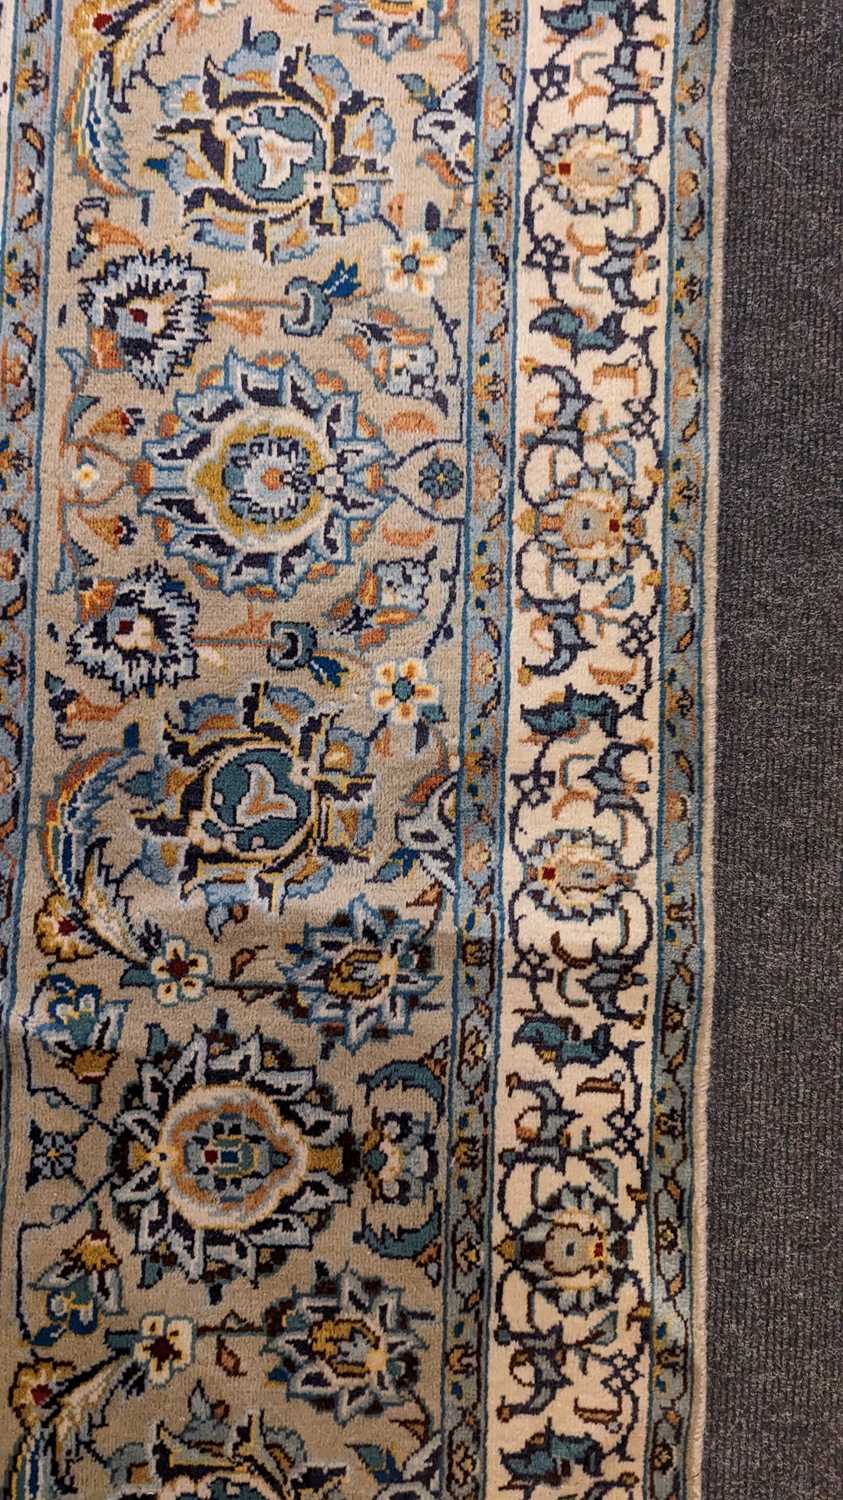 A Kashan carpet - Image 23 of 36